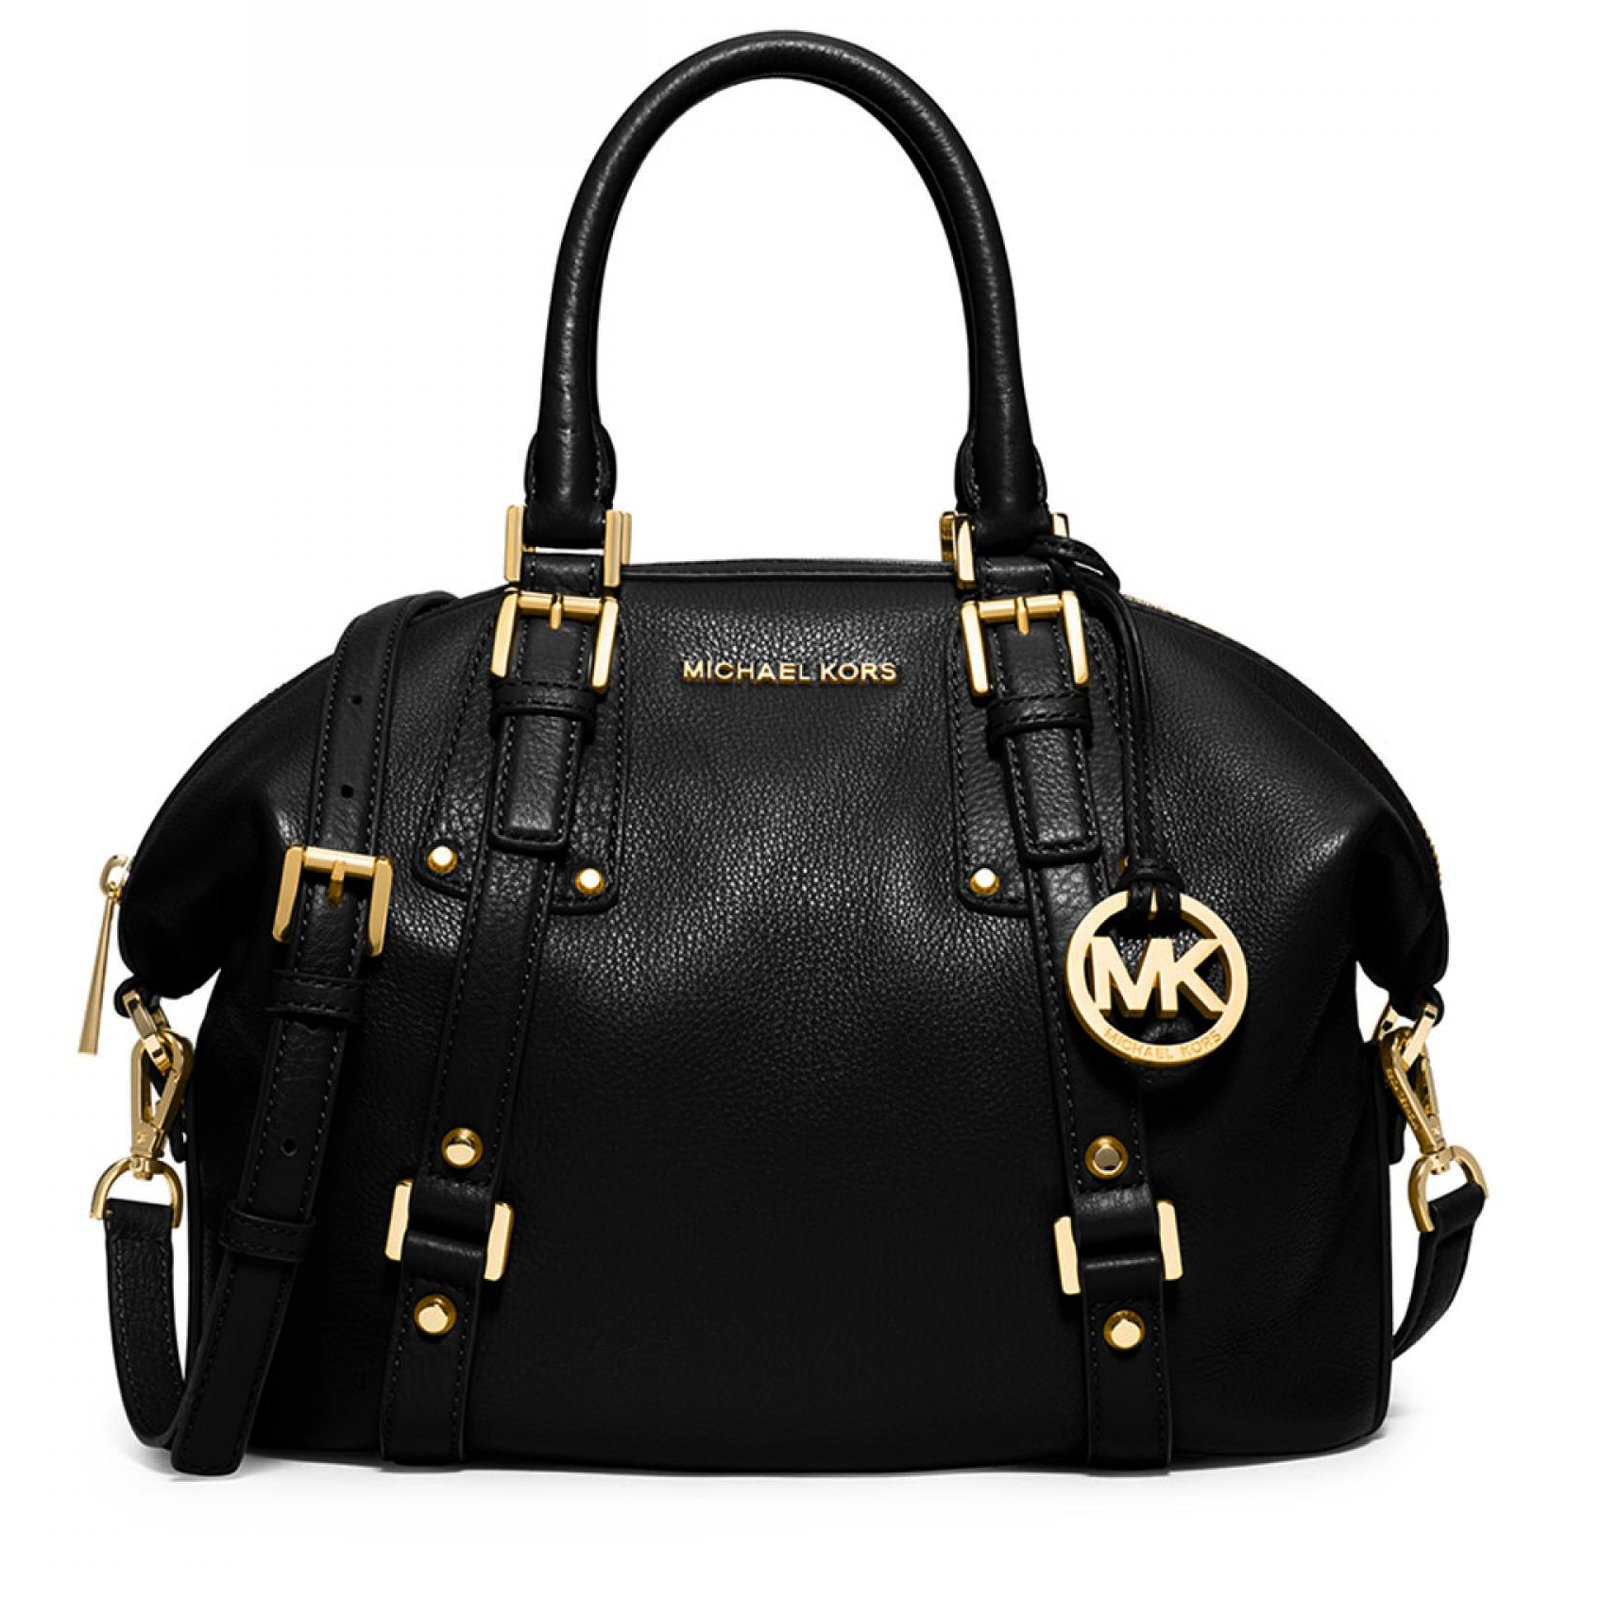 michael kors black leather handbag